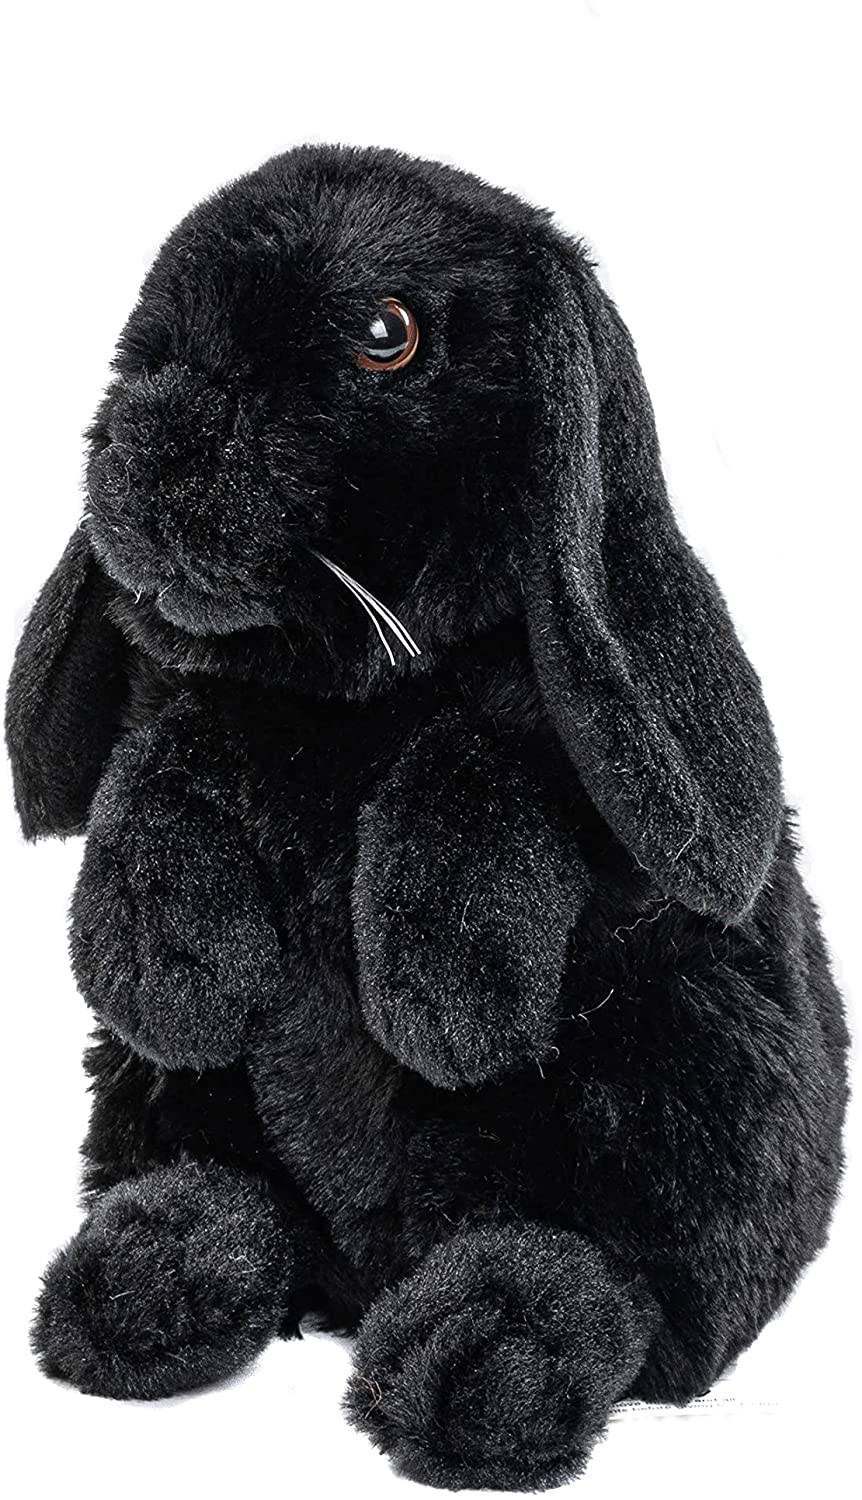 Uni-Toys - ram rabbit black - 19 cm (height) - rabbit, forest animal - plush  toy, cuddly toy | J80032BL